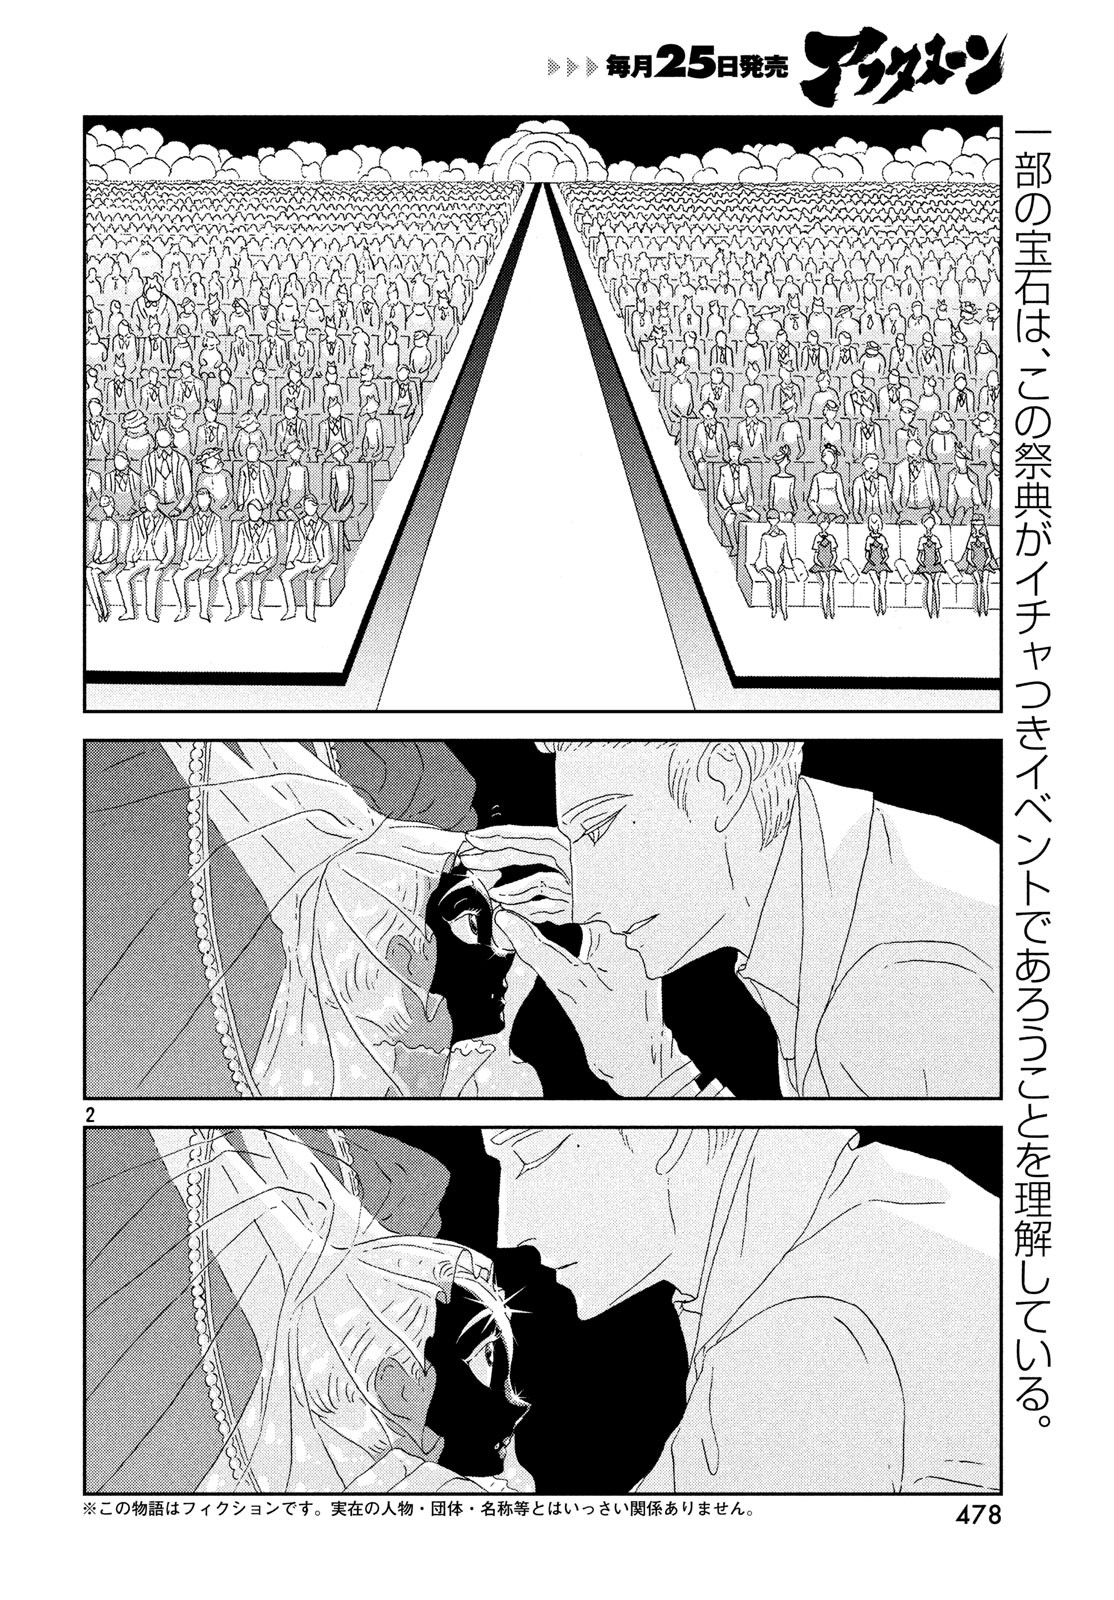 Houseki no Kuni - Chapter 75 - Page 2